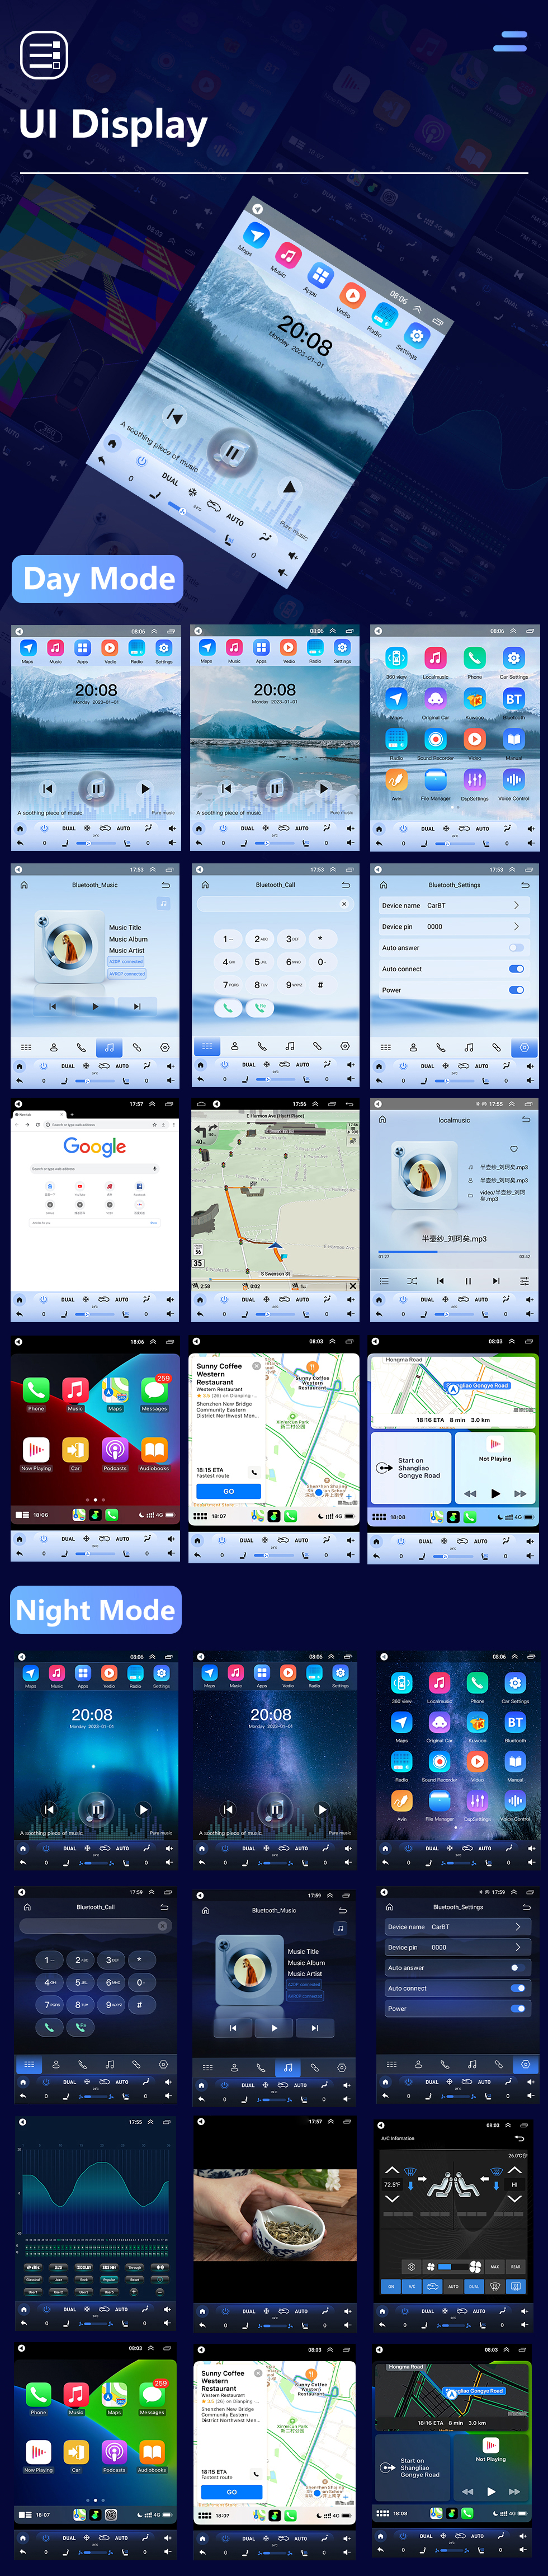 Seicane 9,7-Zoll-HD-Touchscreen für 2007-2010 Ford Mondeo mk4 GPS Navi Android Auto GPS-Navigation Autoradio Reparaturunterstützung Bluetooth